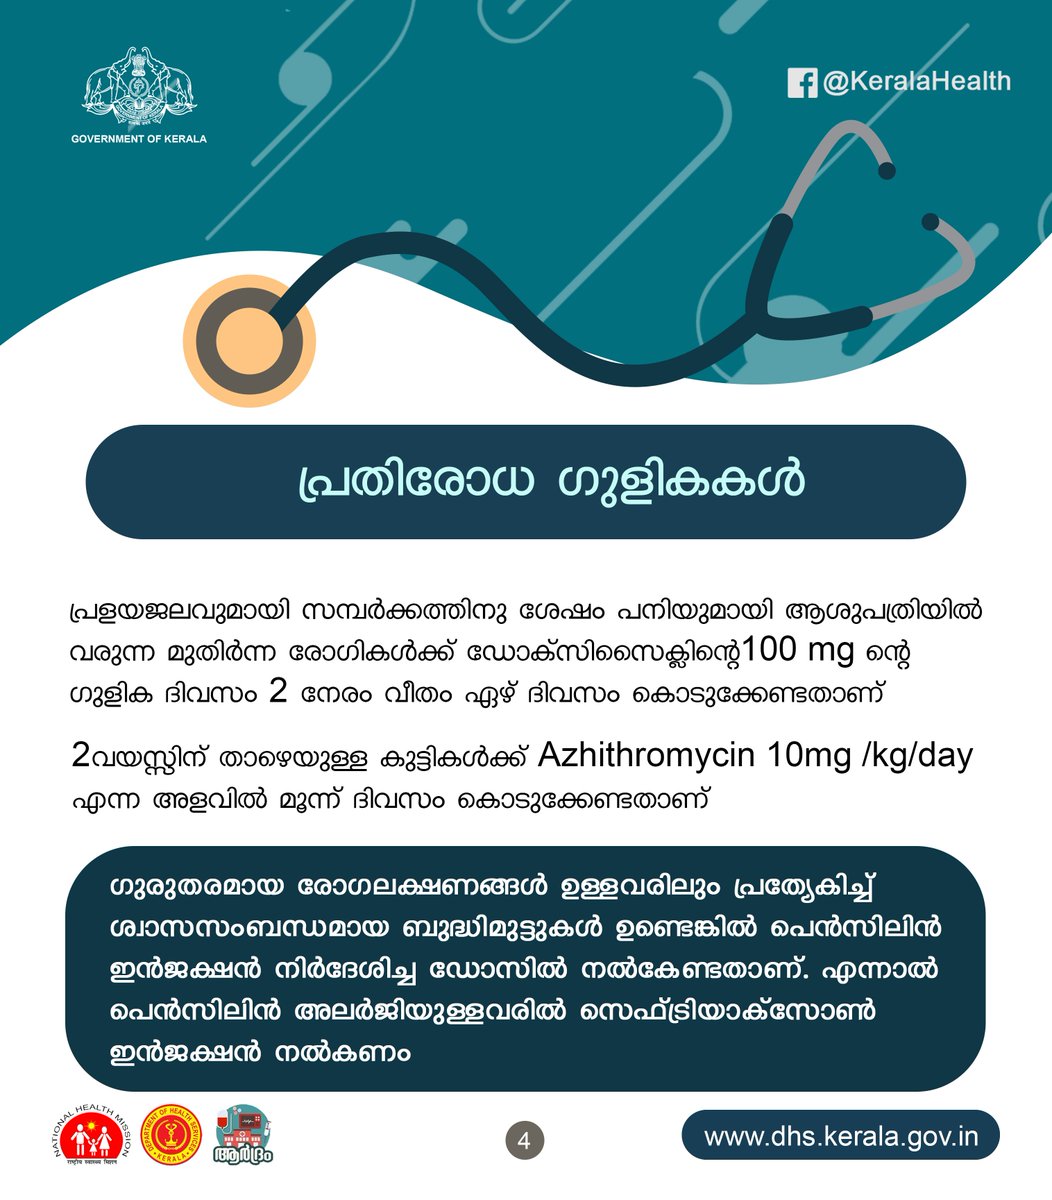 #HealthAdvisory #Leptospirosis #KeralaFloods2018 #KeralaHealth @prdlivekerala @shailajateacher @CMOKerala @Arogyakeralam